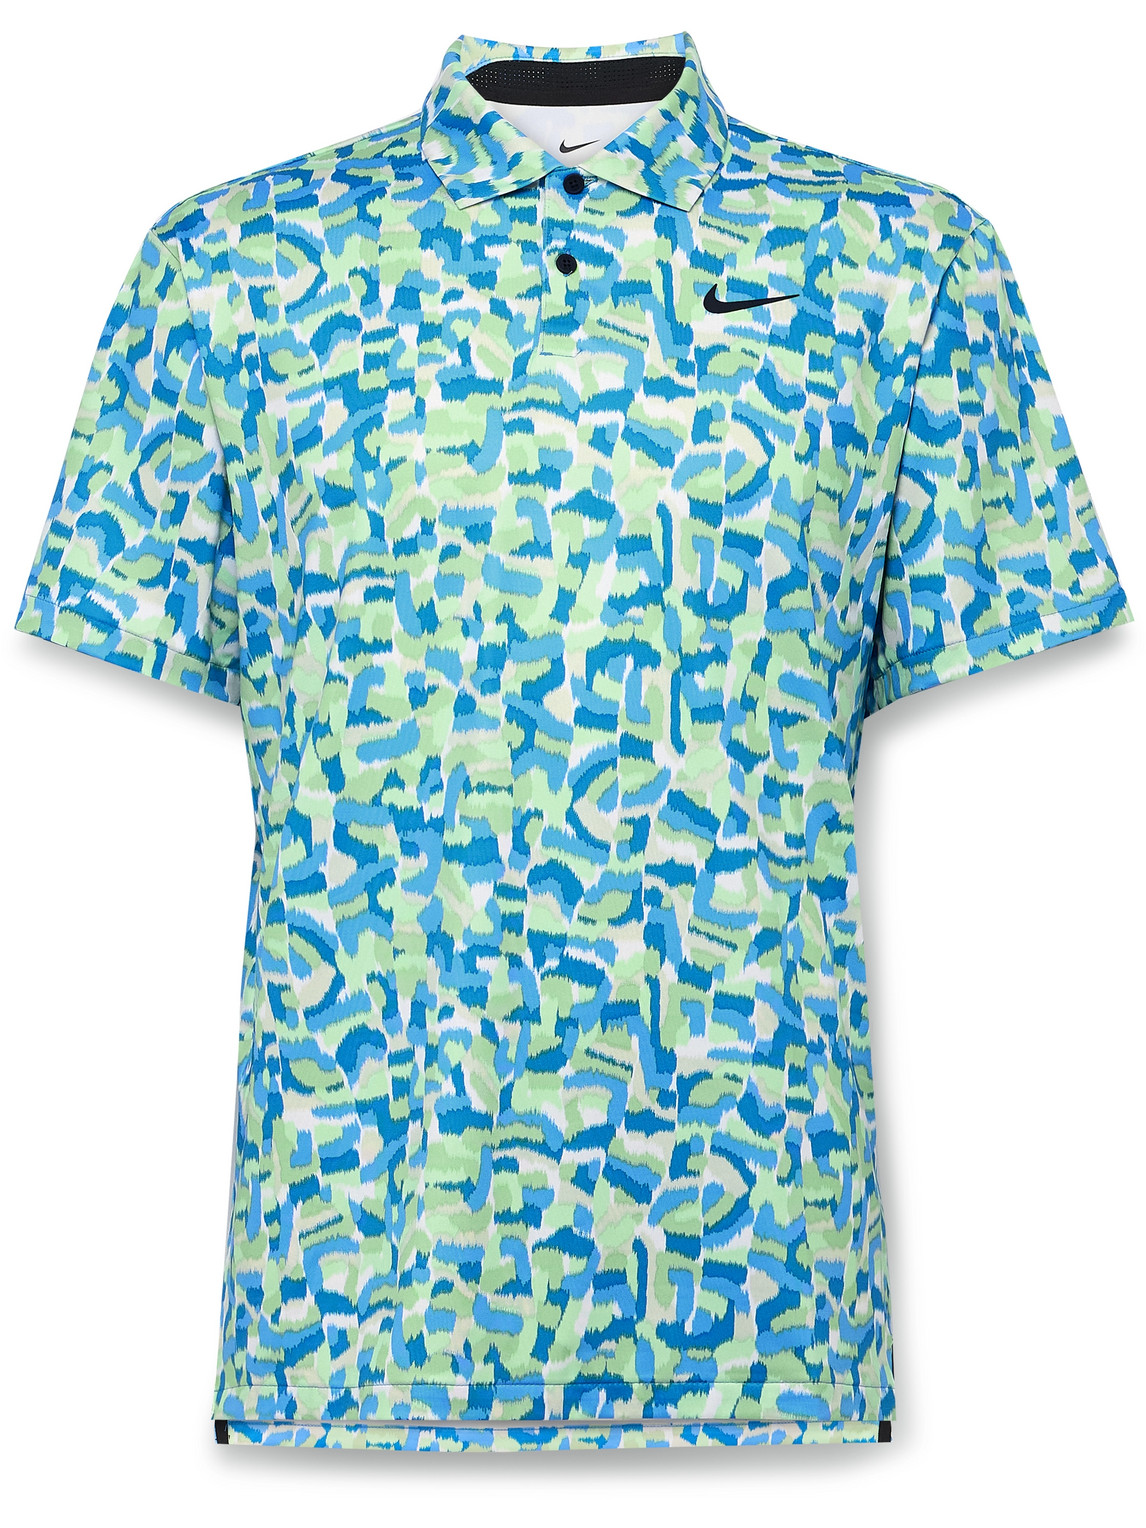 Nike Tour Printed Dri-fit Golf Polo Shirt In Blue